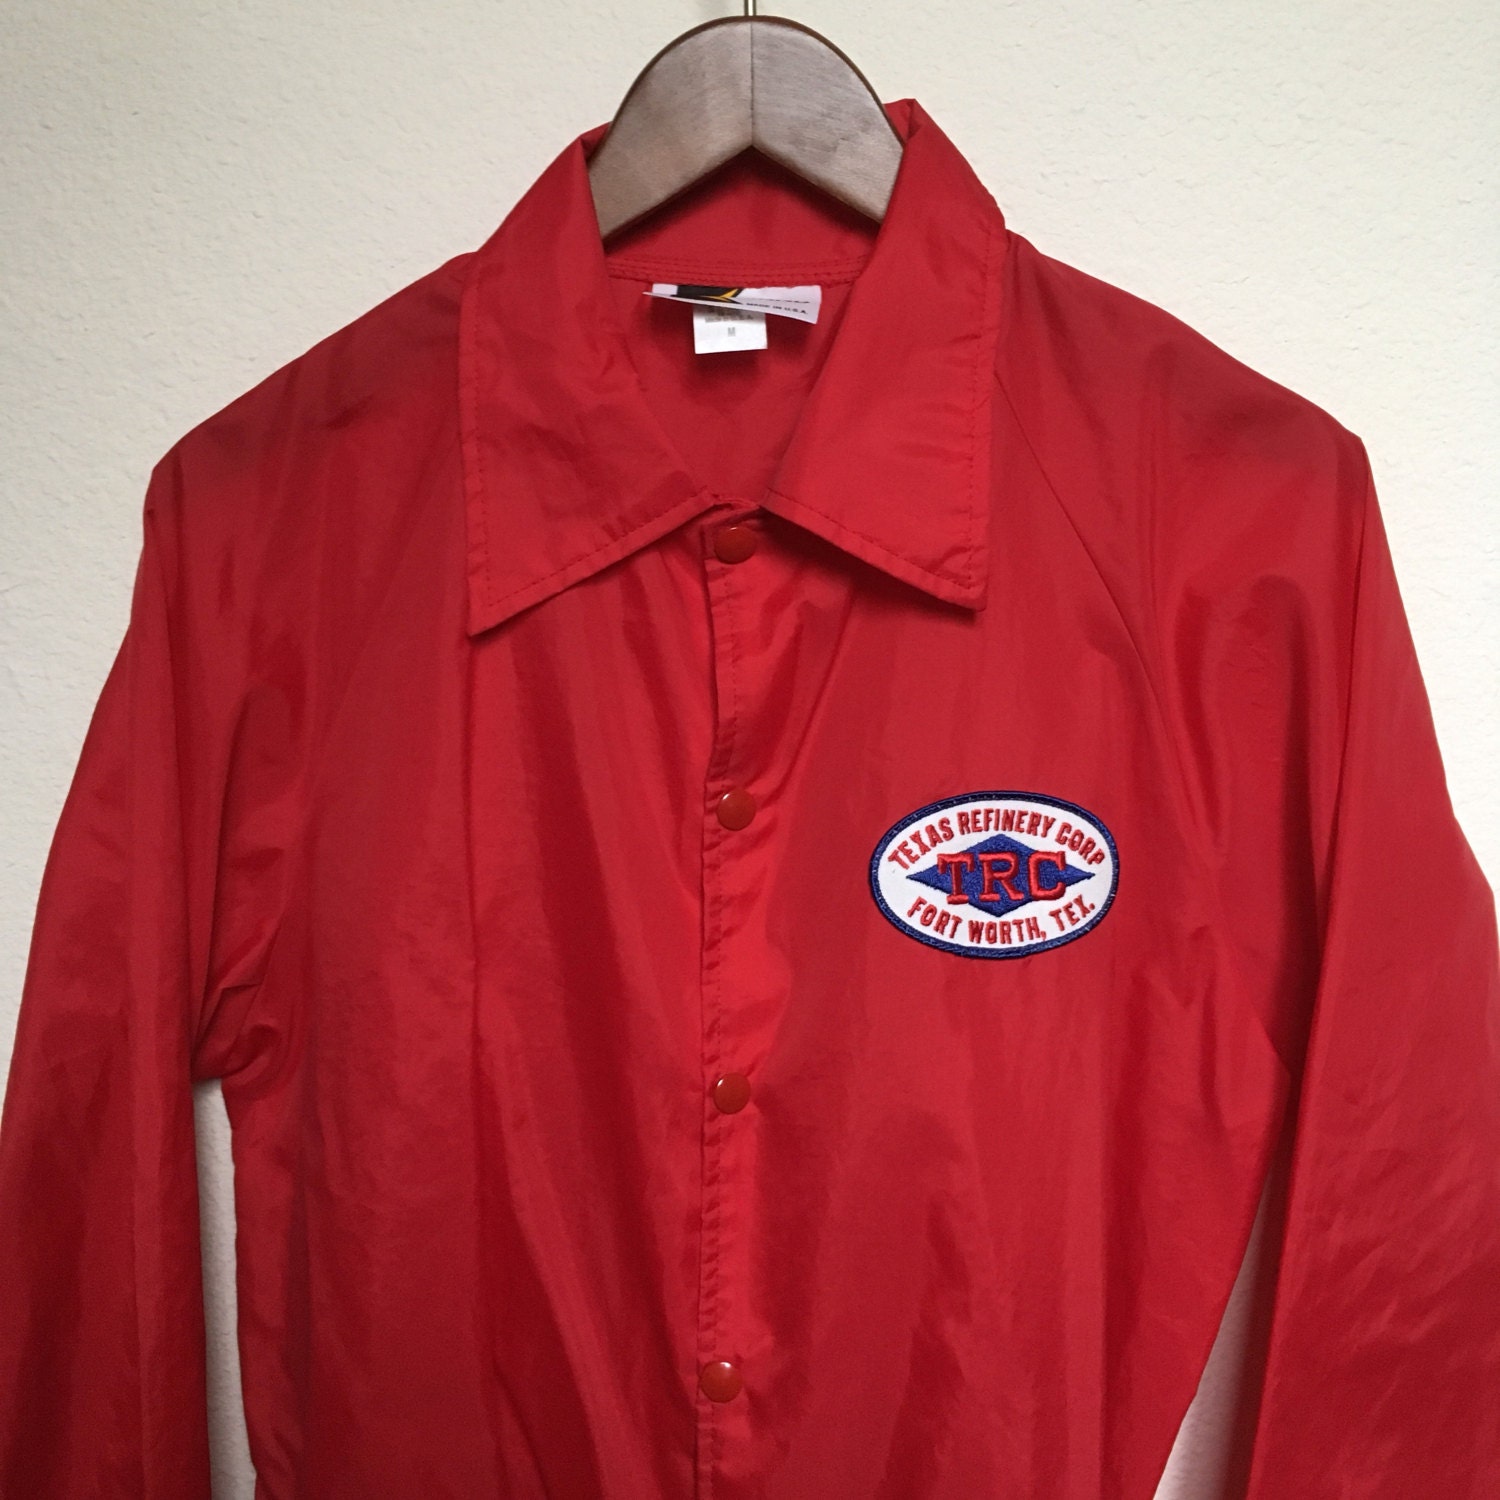 Sz M/L Vintage 80s Sears 3 Pocket Red Nylon Windbreaker Jacket